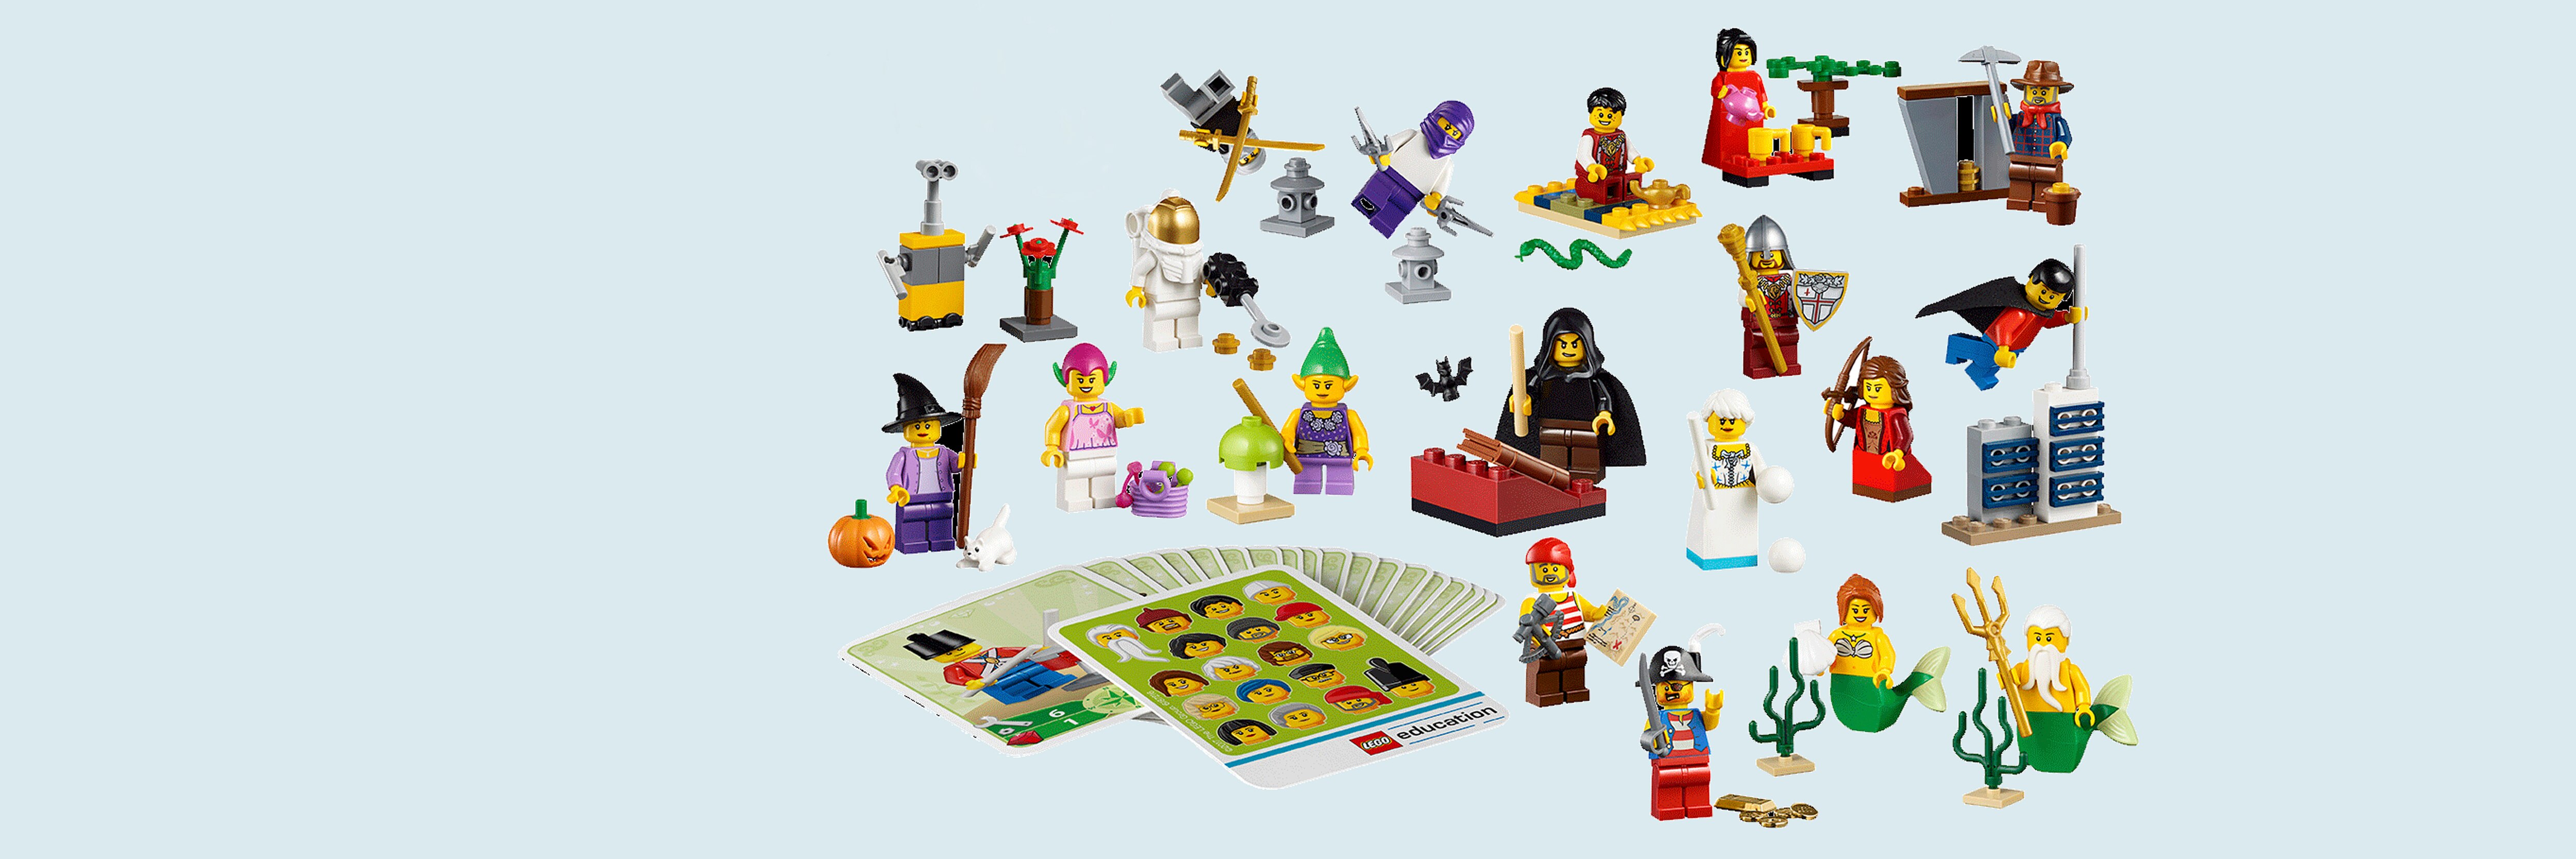 LEGO Education Preschool Fantasy Minifigure Set